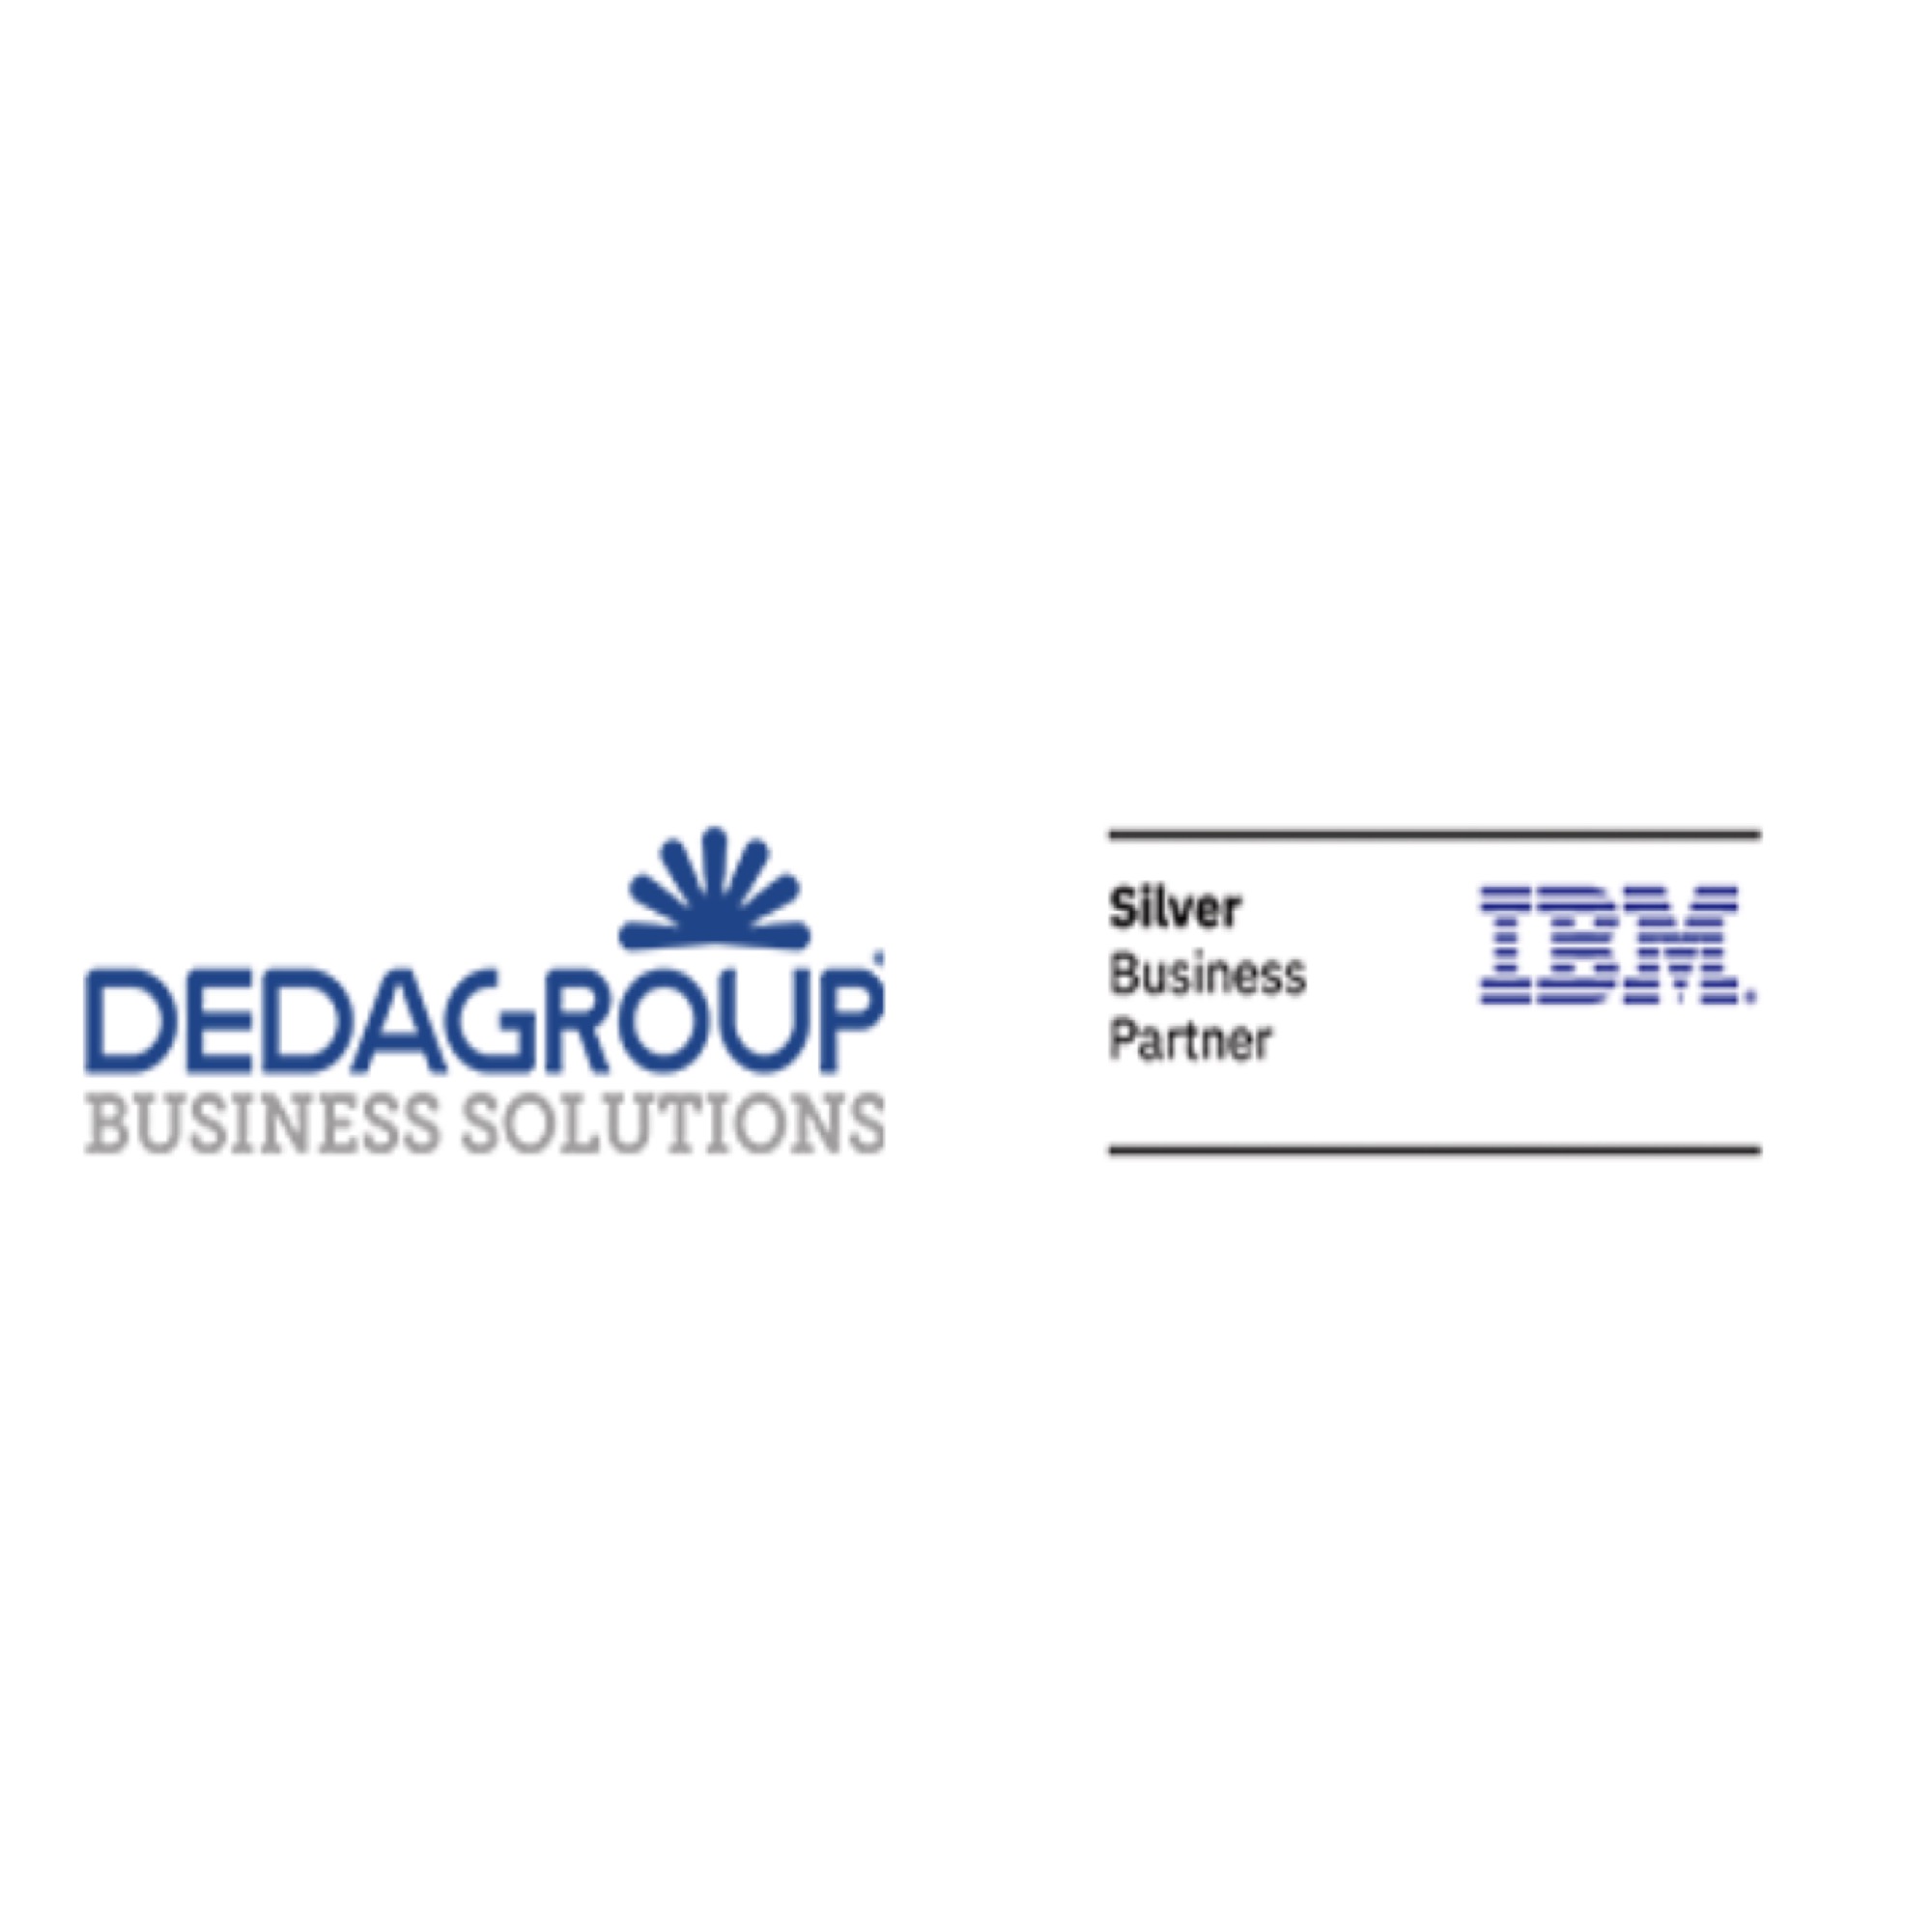 Il Salone dei Pagamenti DEDAGROUP BUSINESS SOLUTIONS, SILVER BUSINESS PARTNER IBM Logo